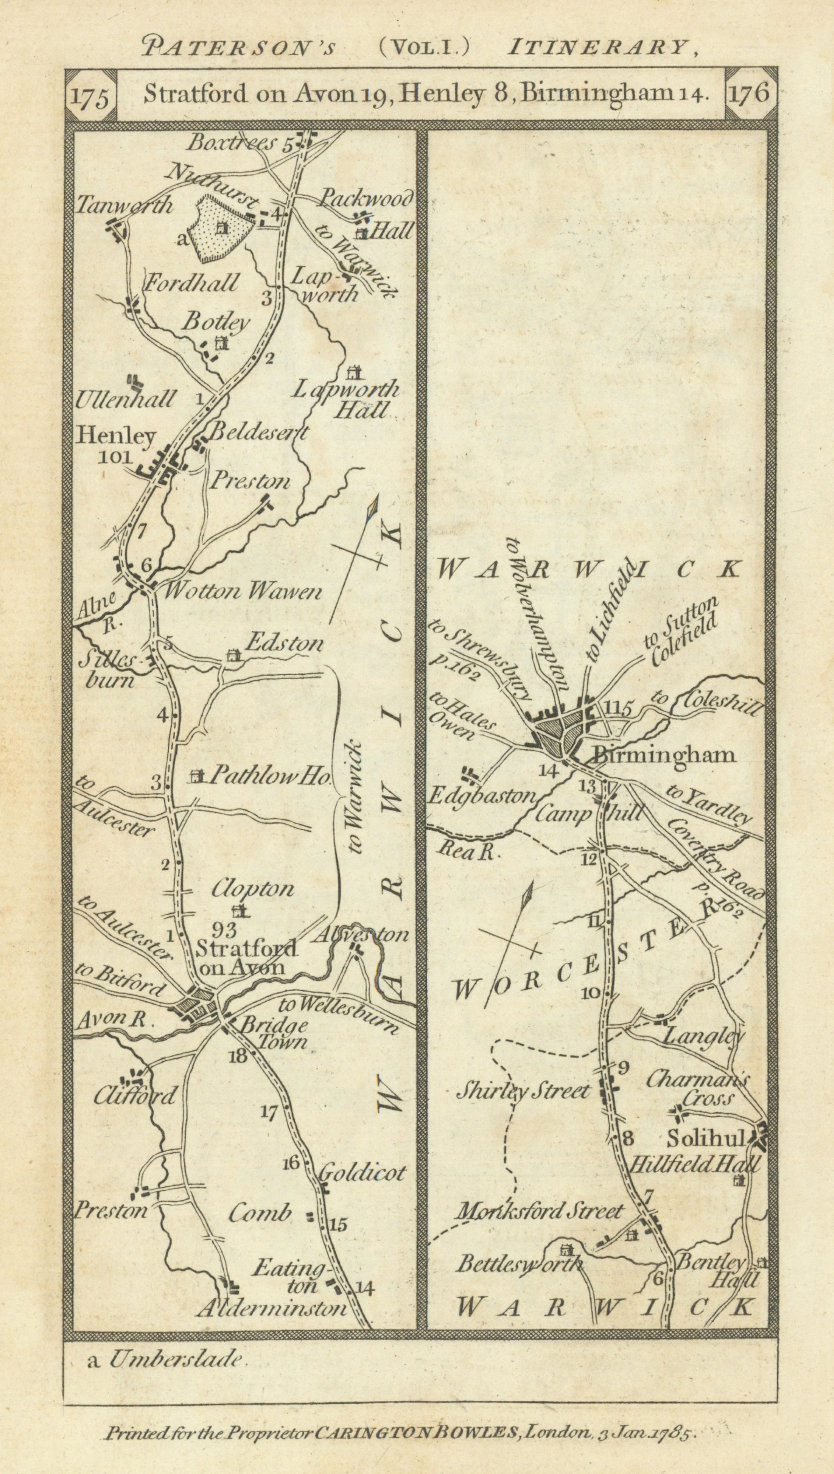 Associate Product Stratford/Avon-Henley/Arden-Solihull-Birmingham road strip map PATERSON 1785